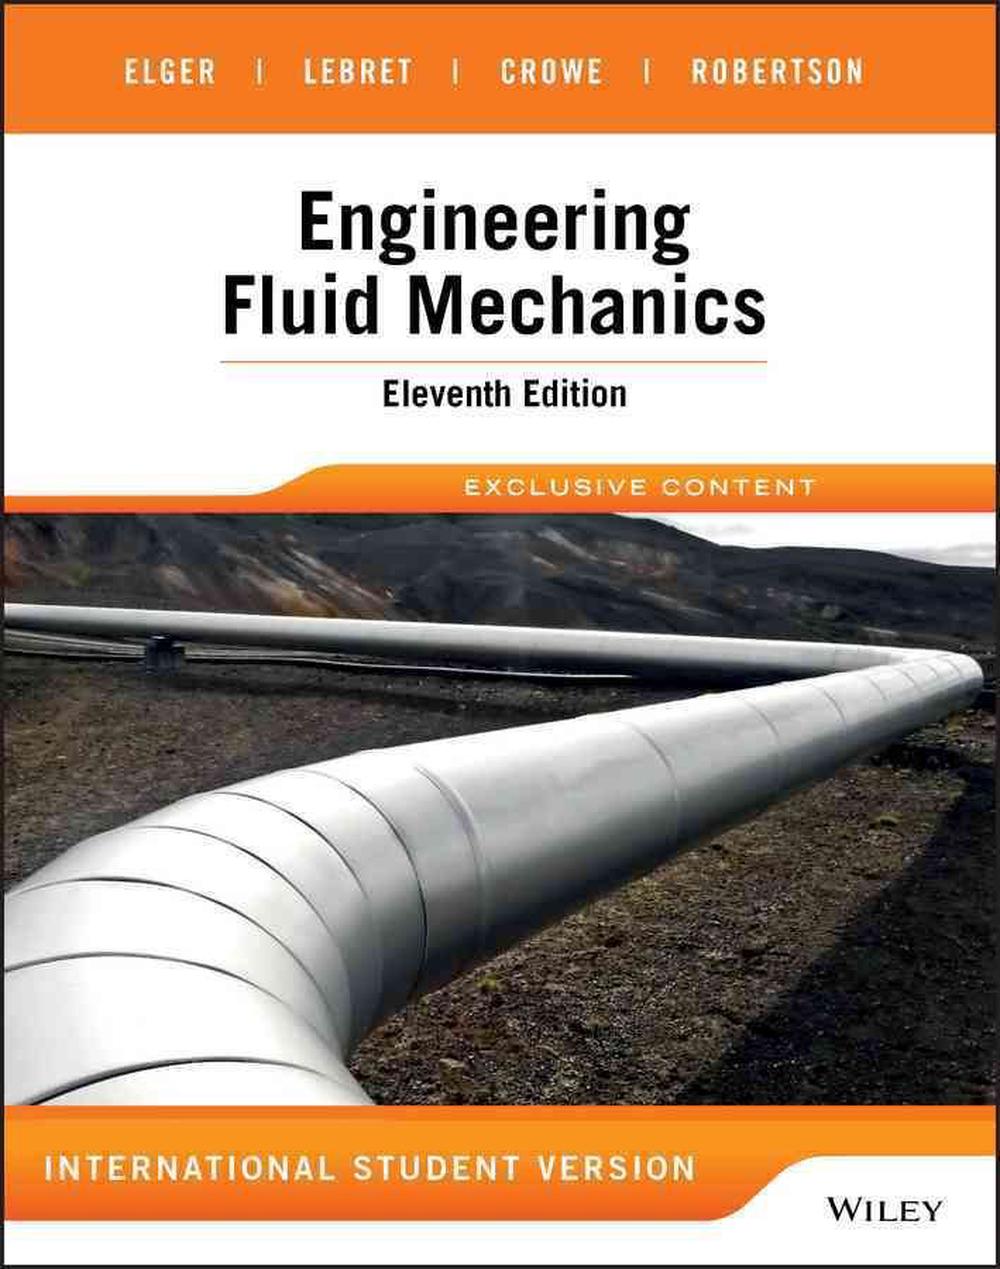 fluid mechanics research papers